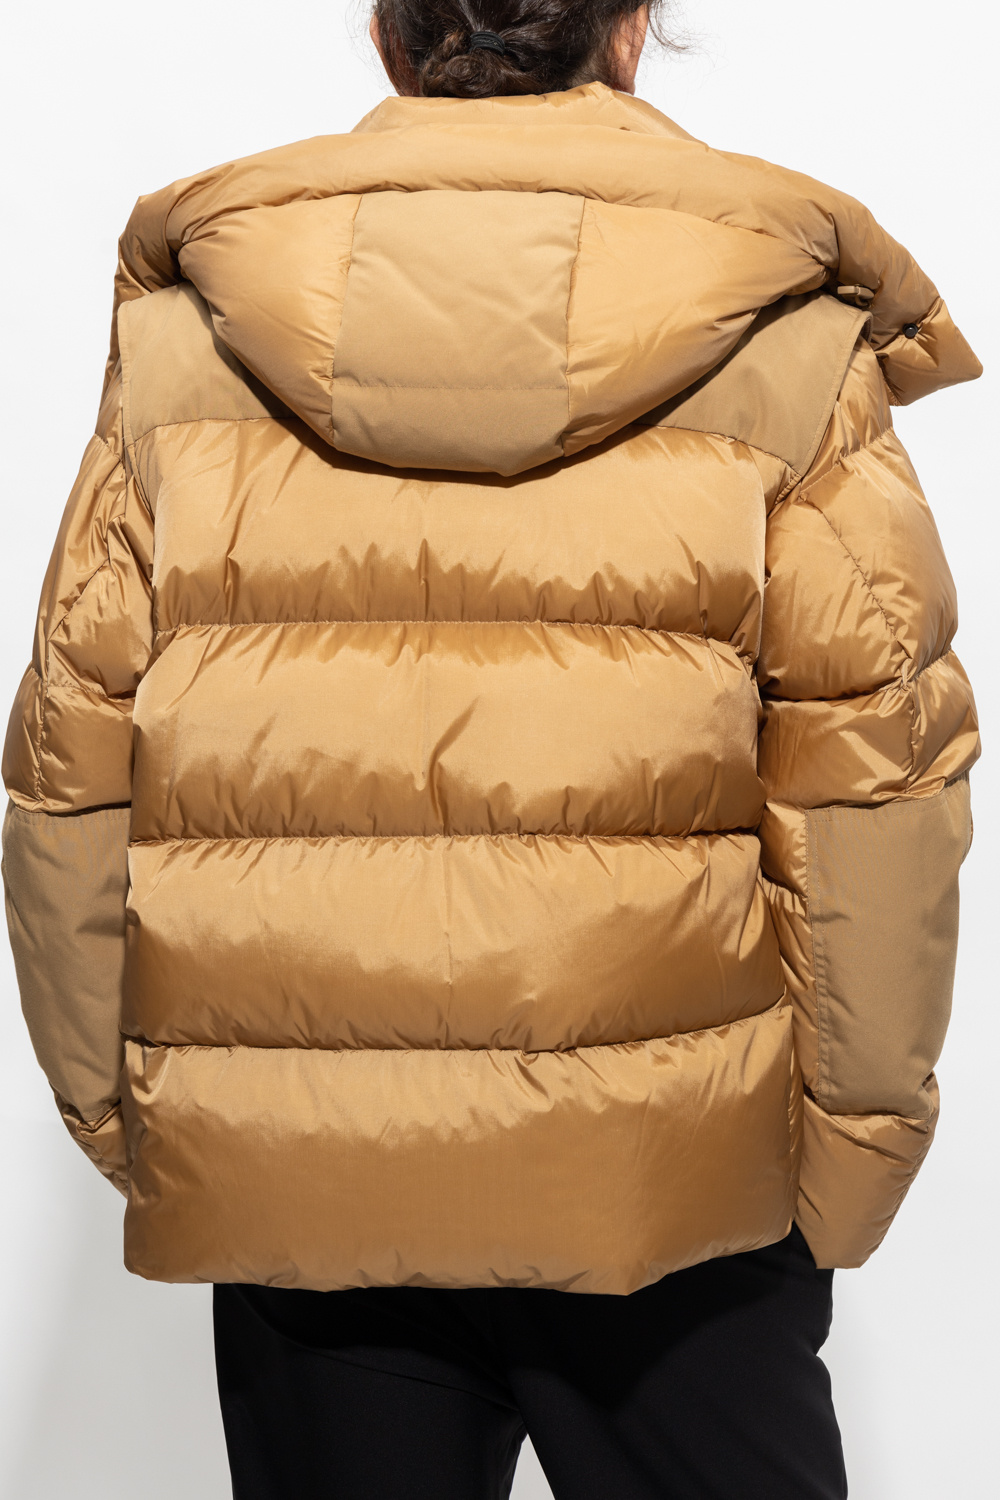 Burberry ‘Leeds’ jacket with detachable sleeves